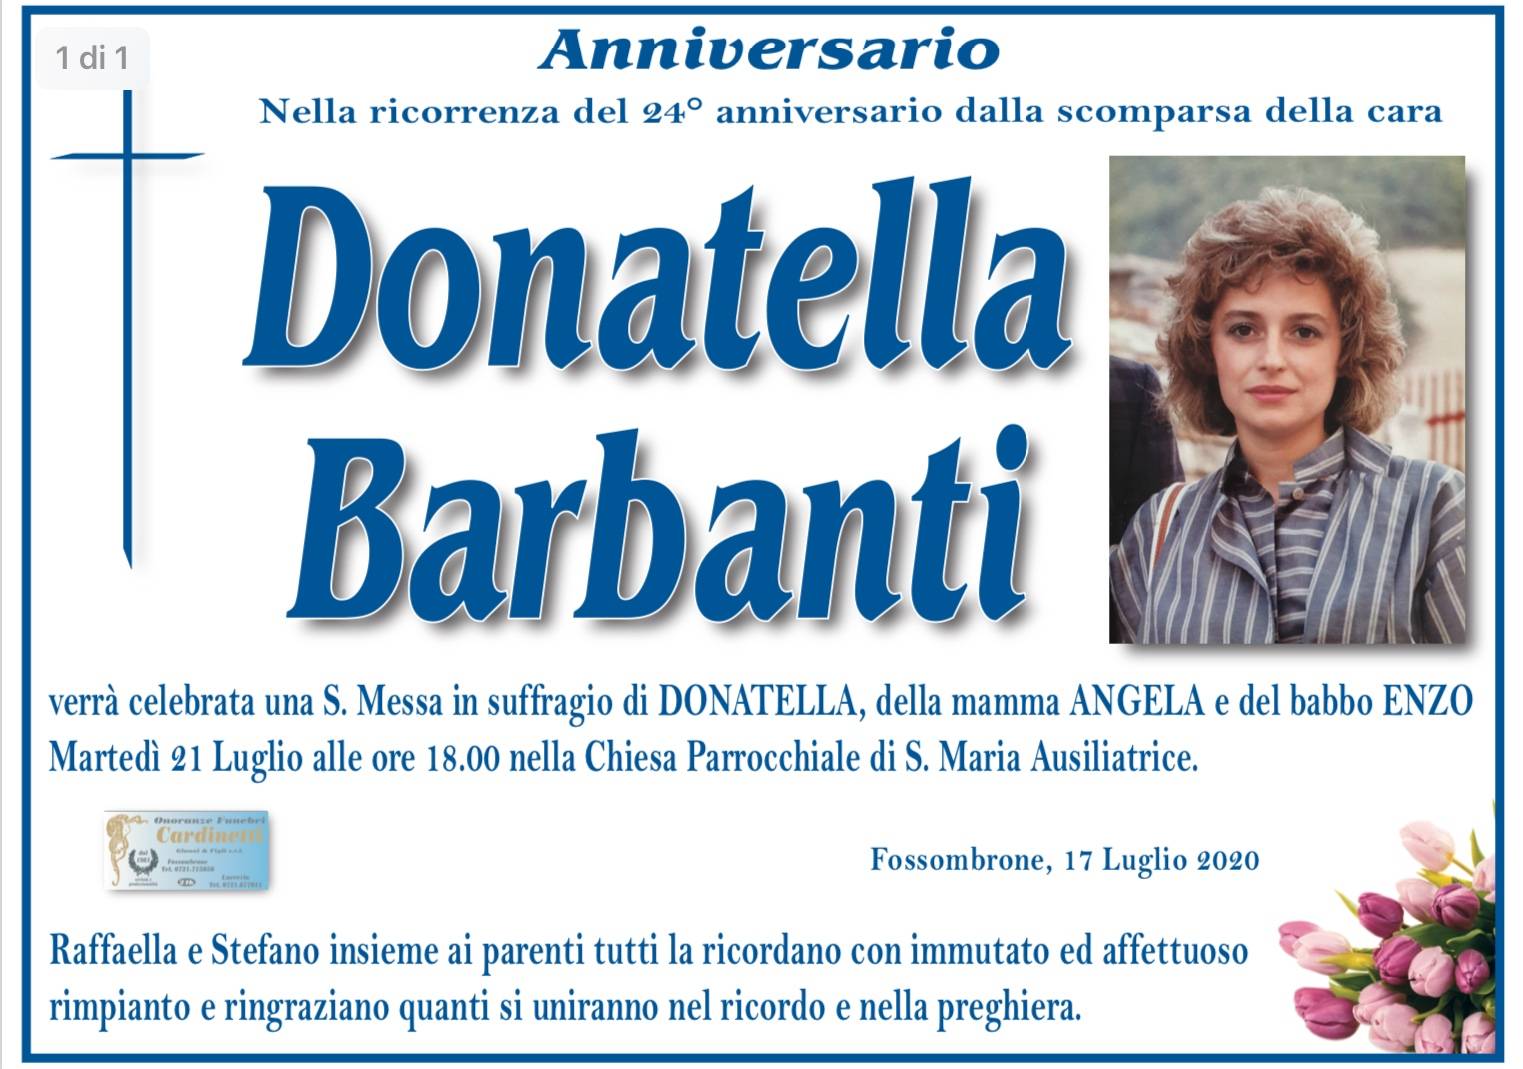 Donatella Barbanti